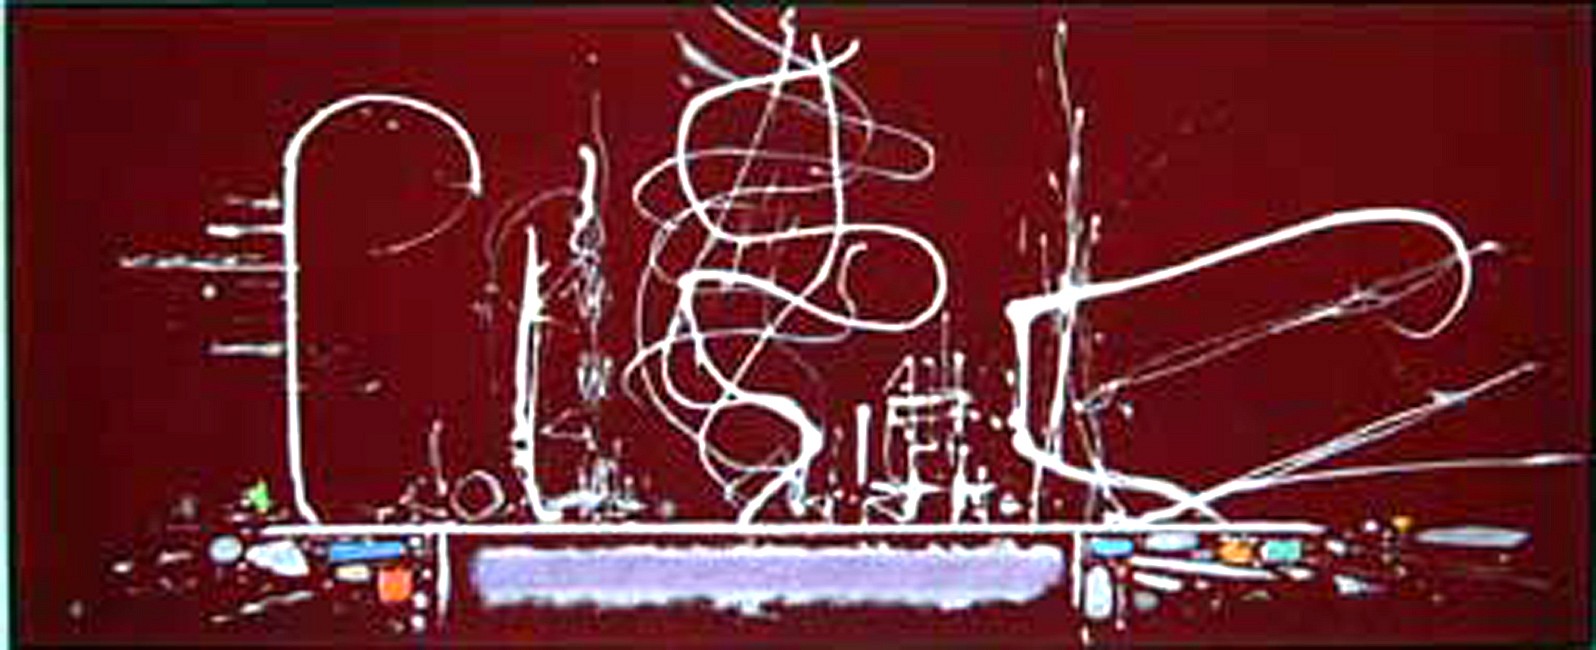 Dan Christensen (Estate), Long Lola, 2003
Acrylic on canvas, 26 x 64 inches
CHRI0006